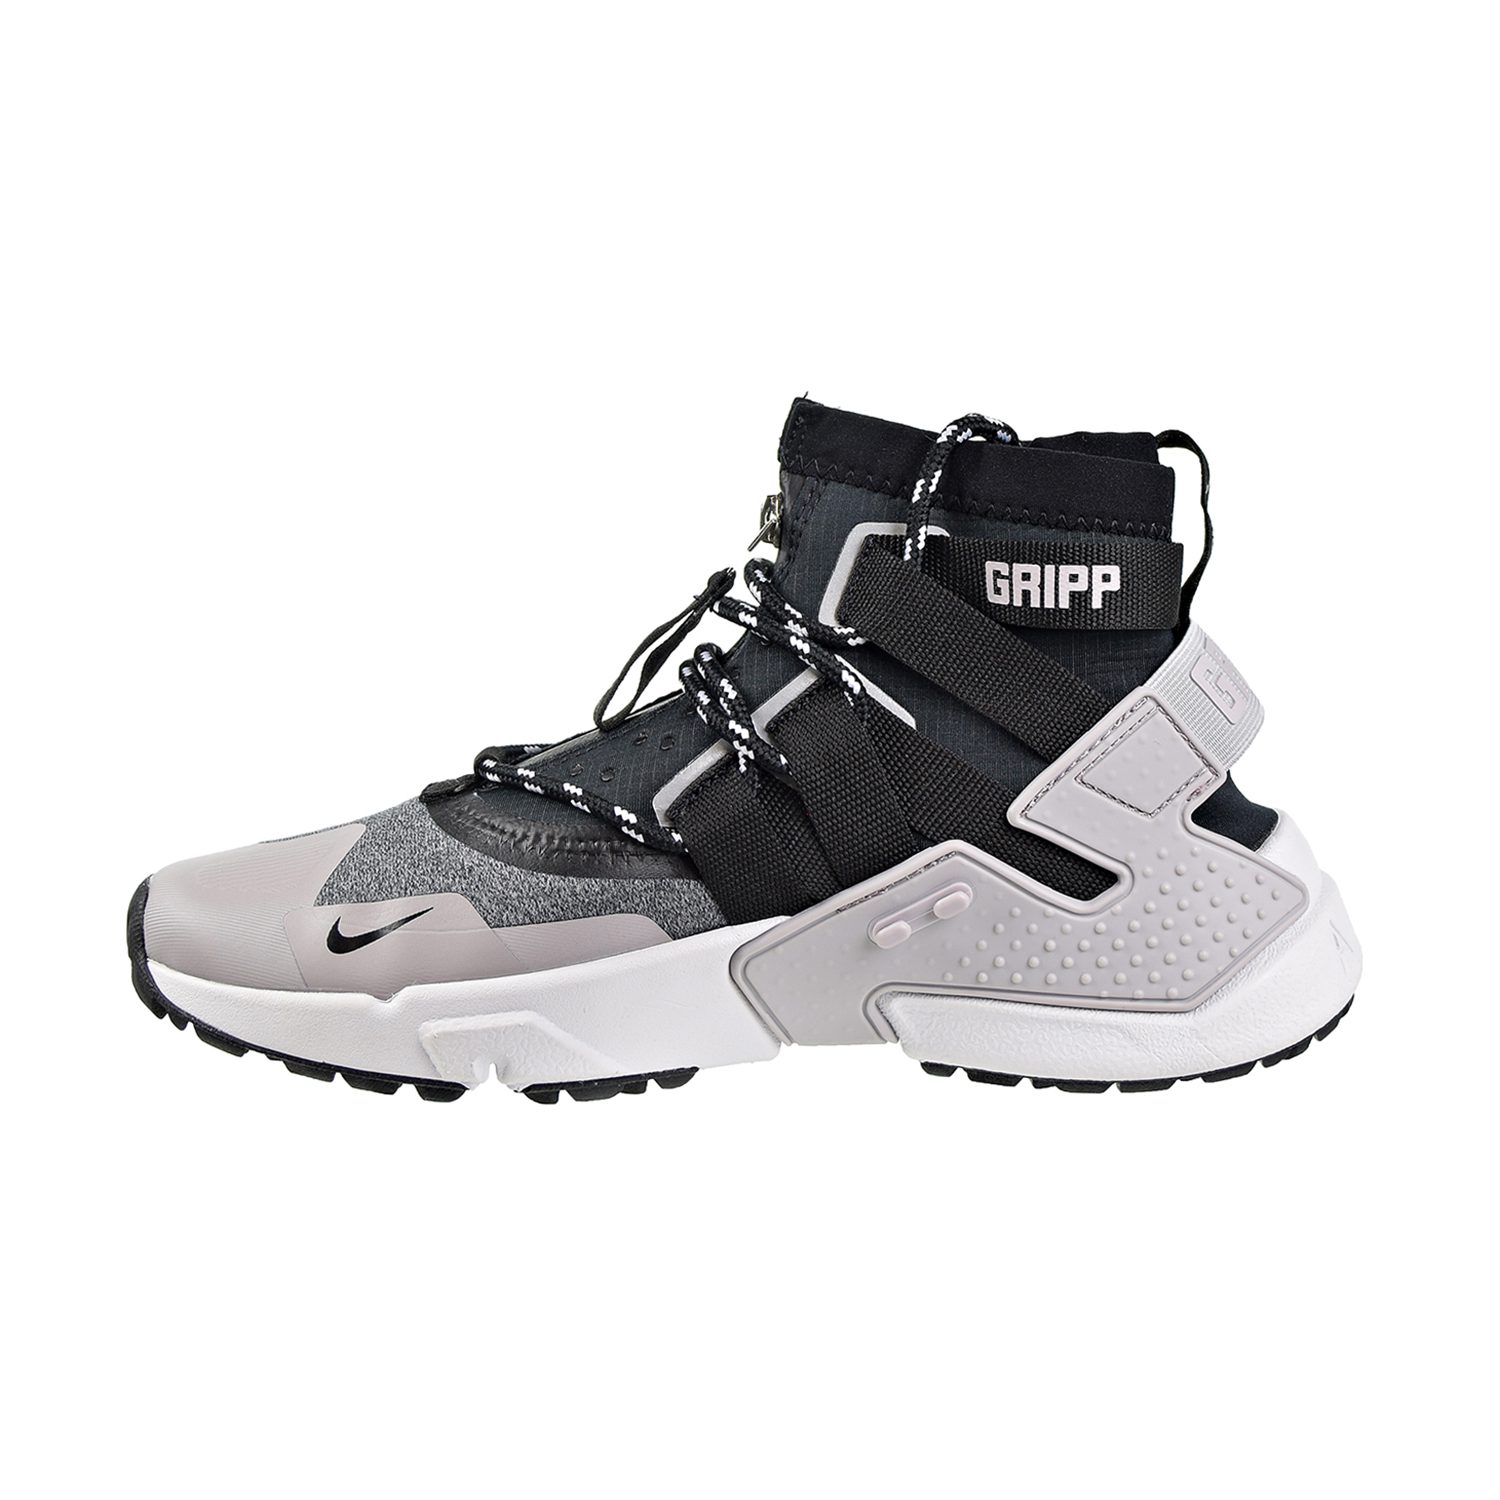 Niike Air Huarache Gripp Men's Shoes Atmosphere Grey-Black AO1730-004 ...